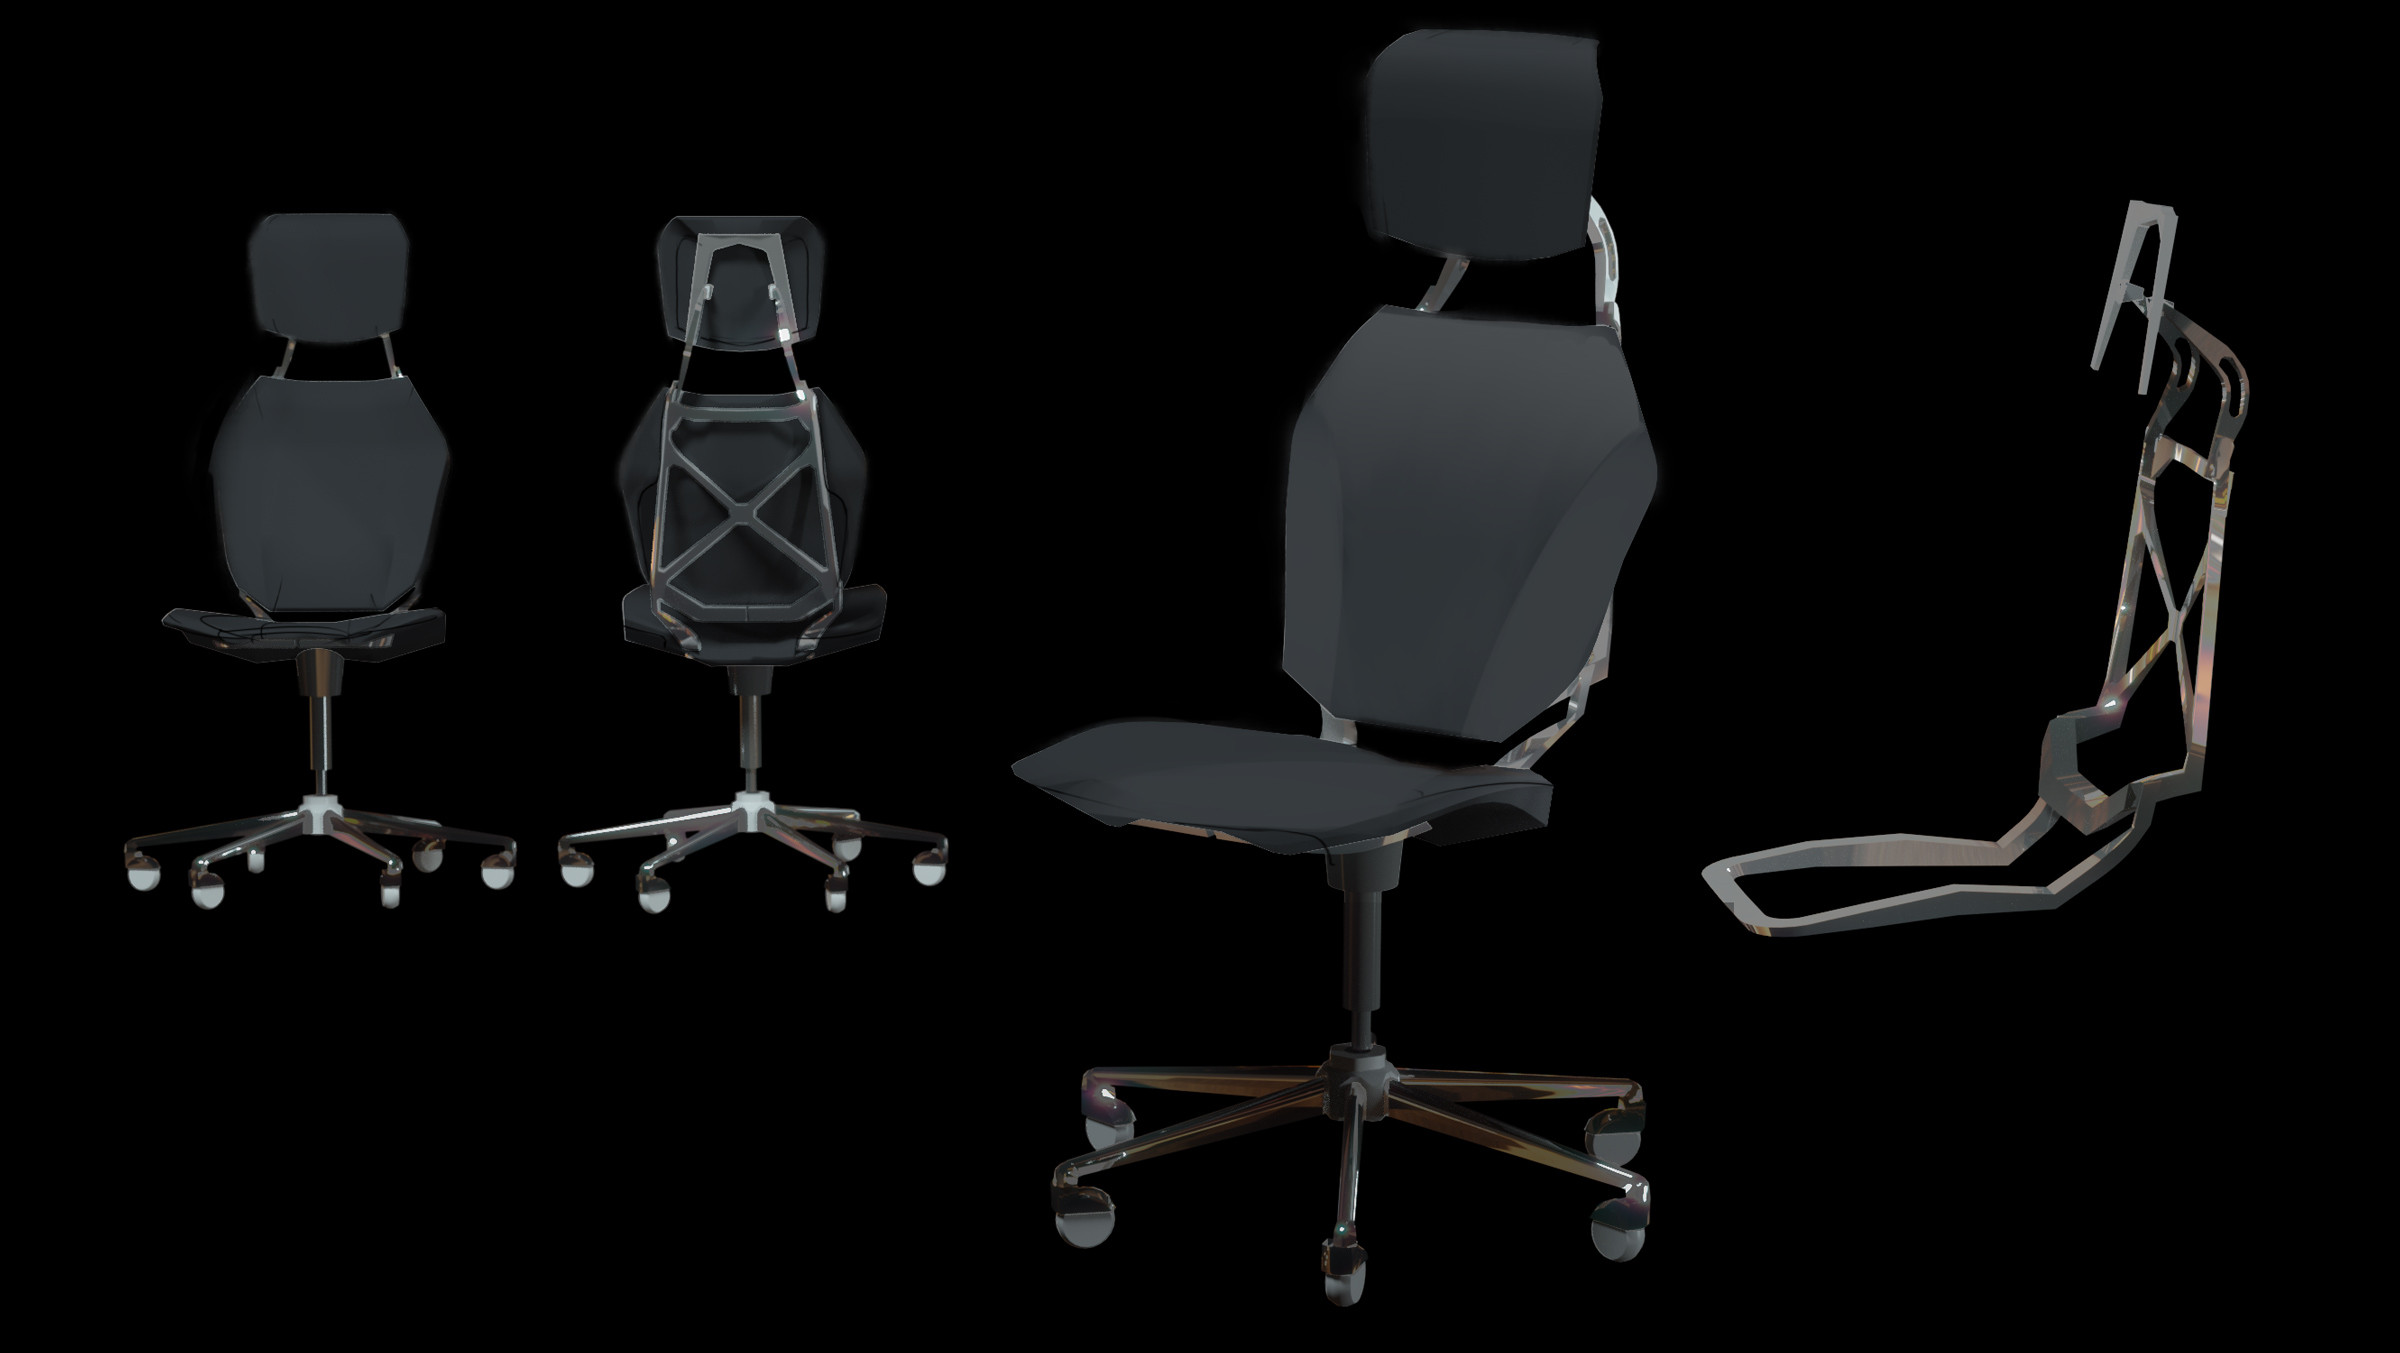 Chair prop design